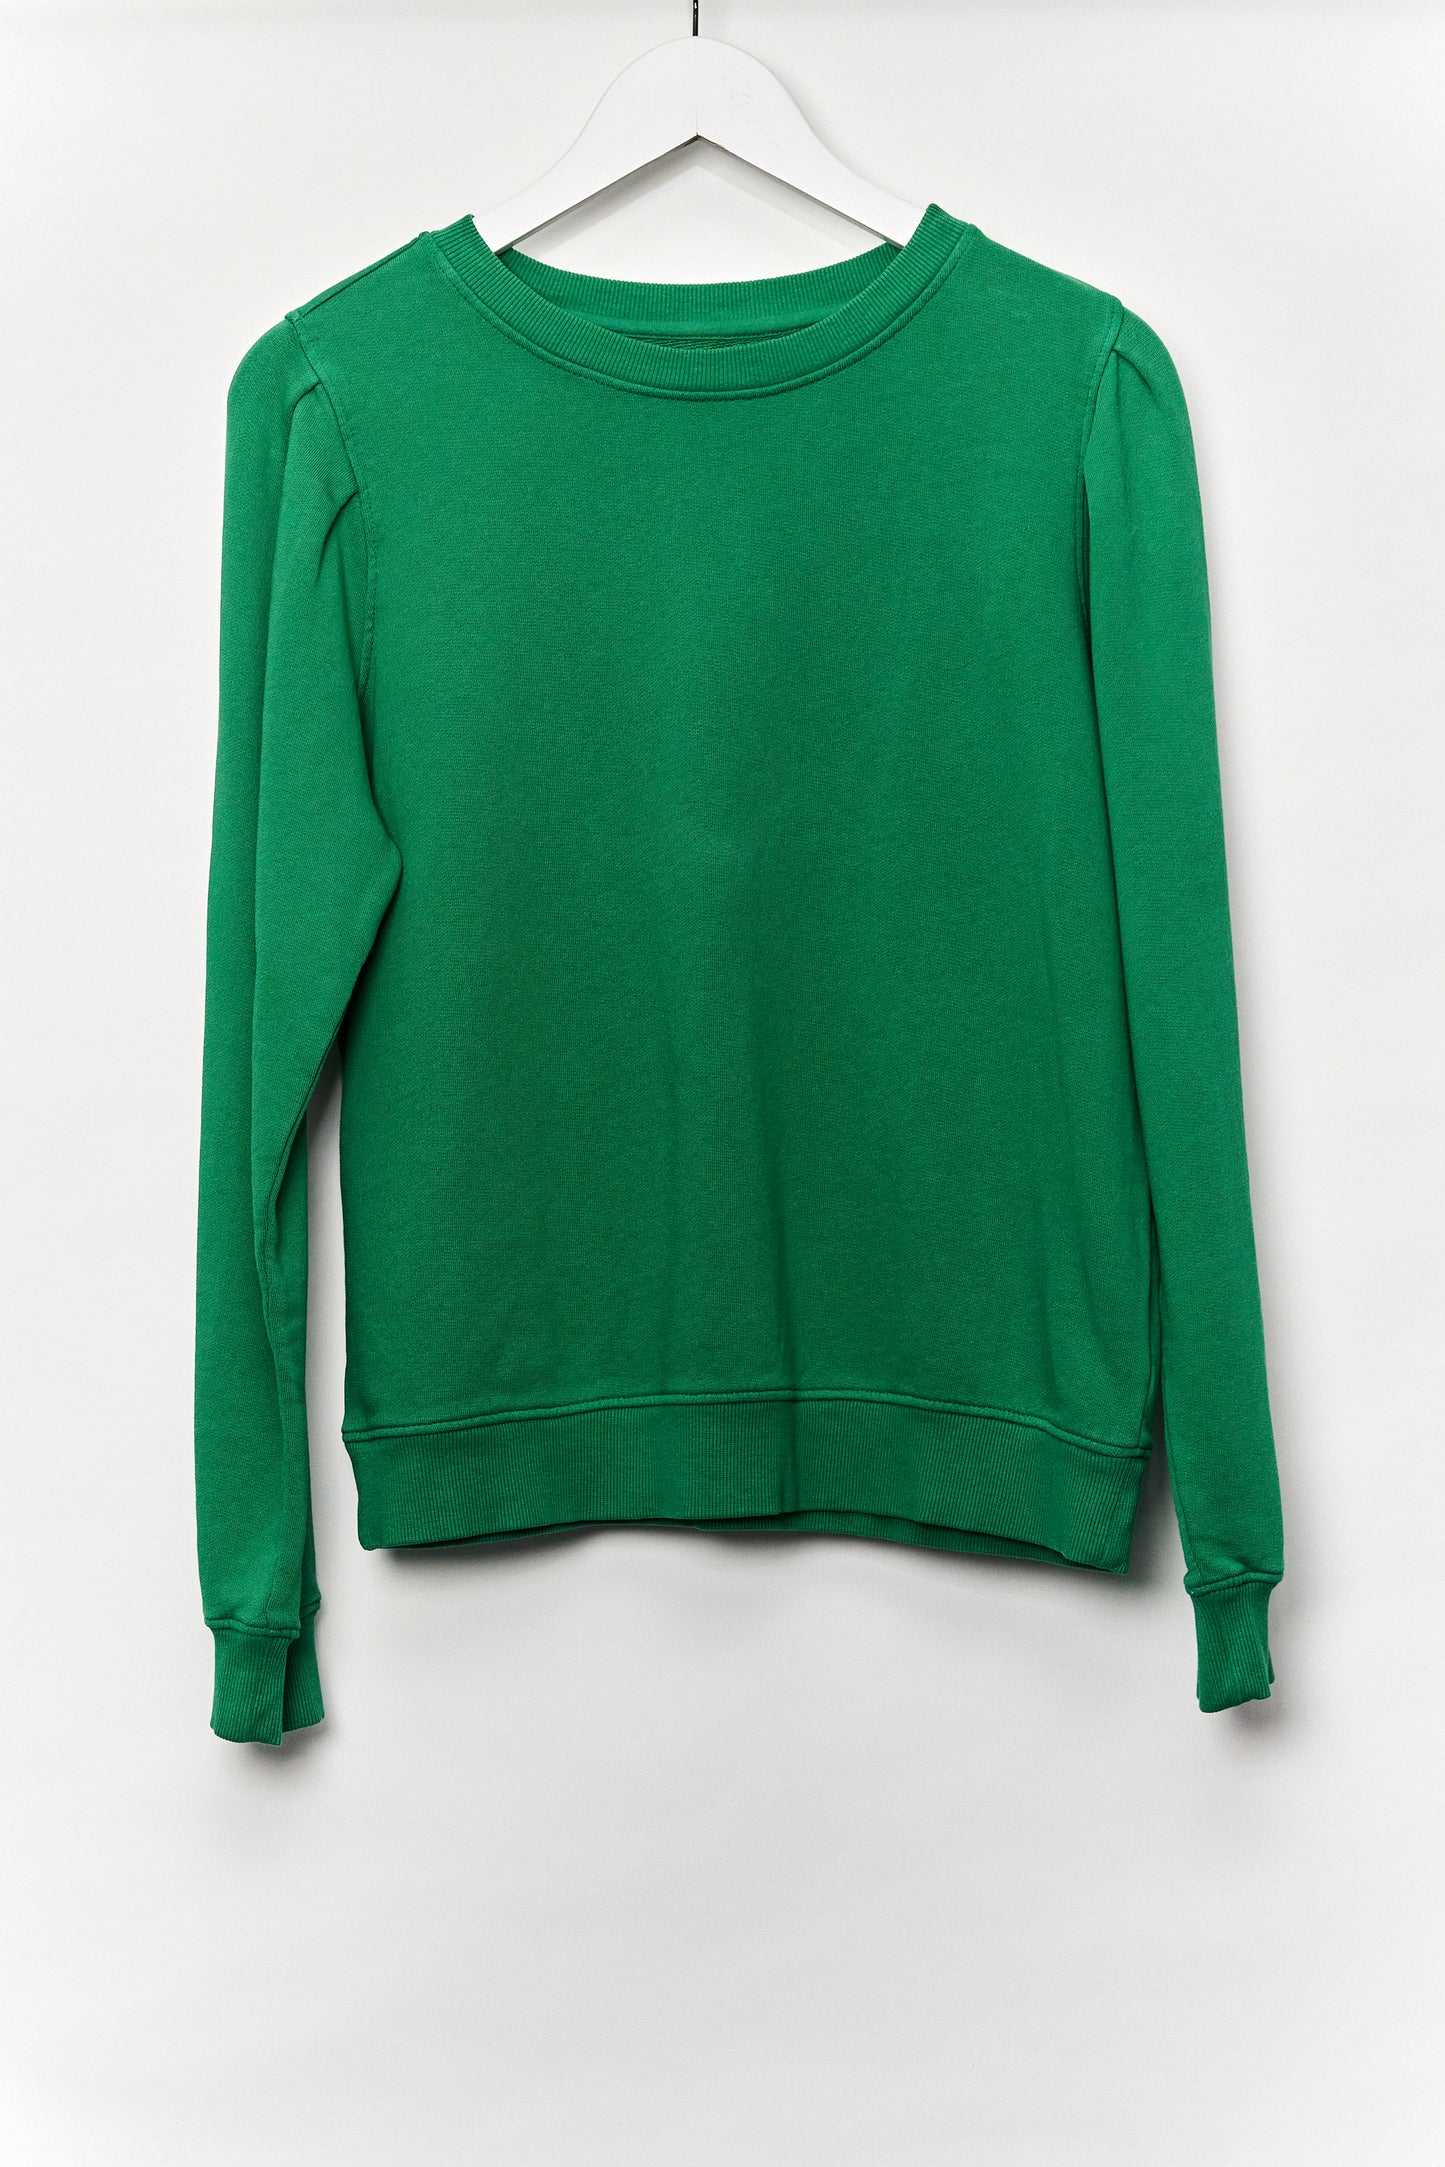 Womens Hush Green Sweatshirt size Small